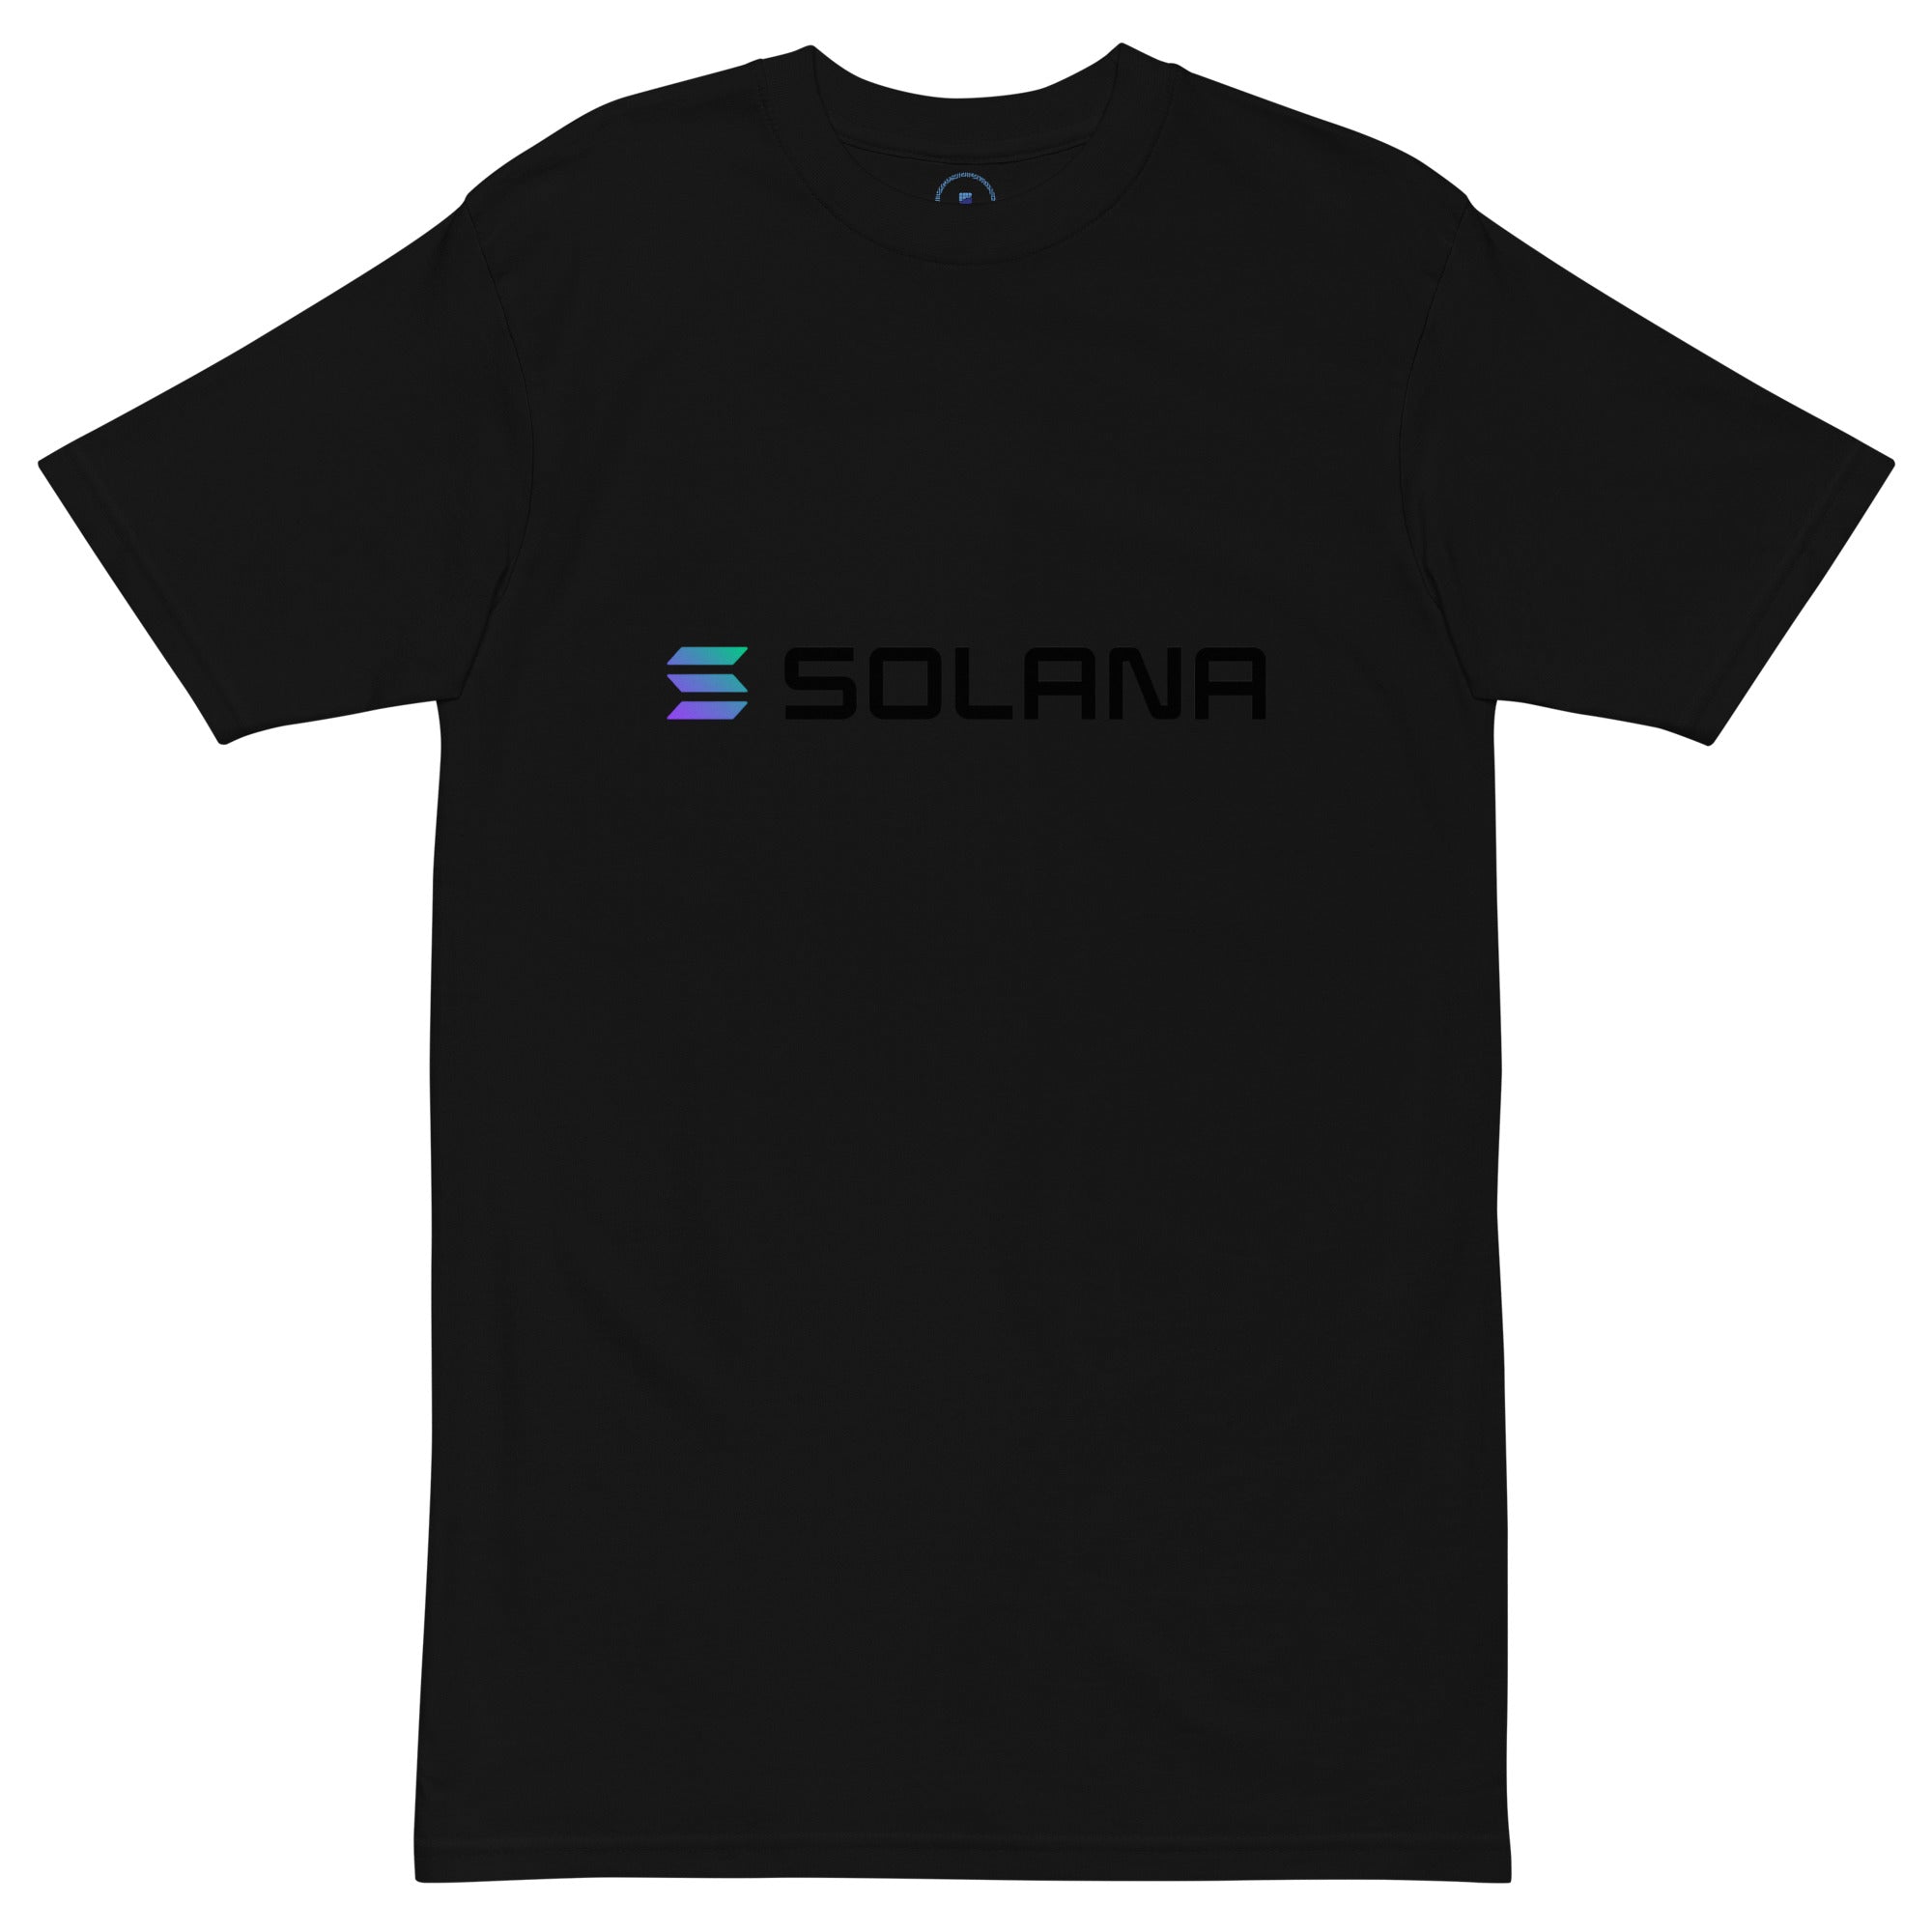 Solana T-Shirt